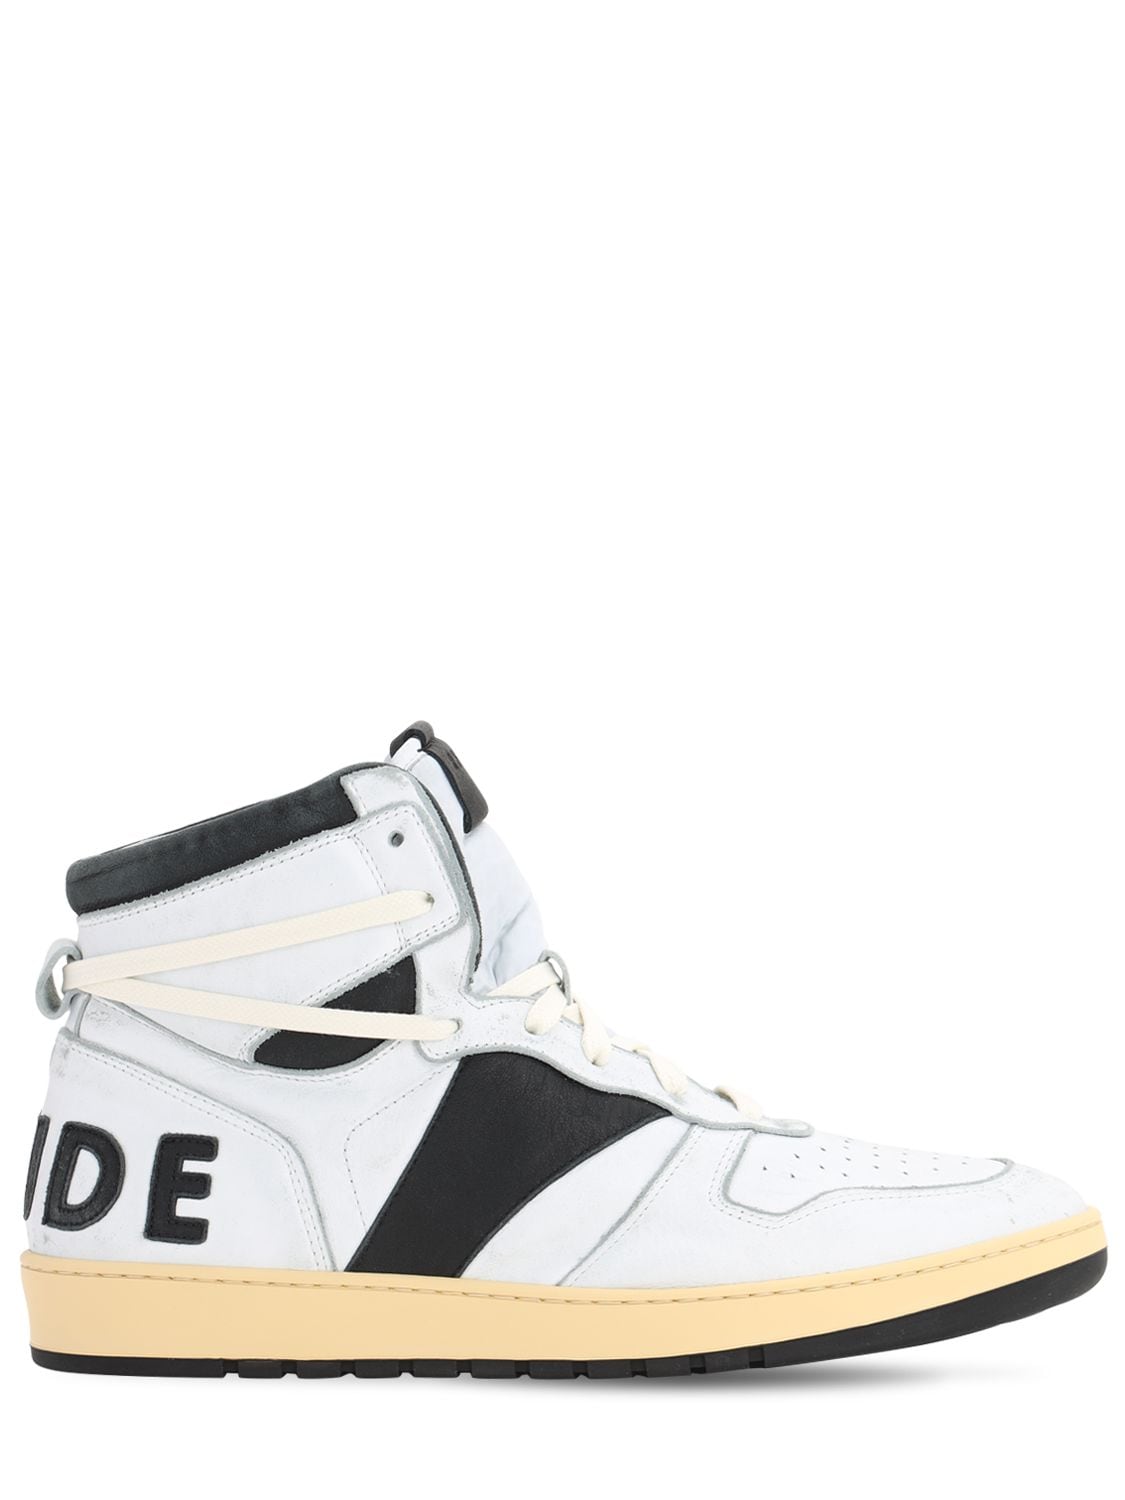 Rhude - Rhecess leather high top sneakers - White/Black | Luisaviaroma